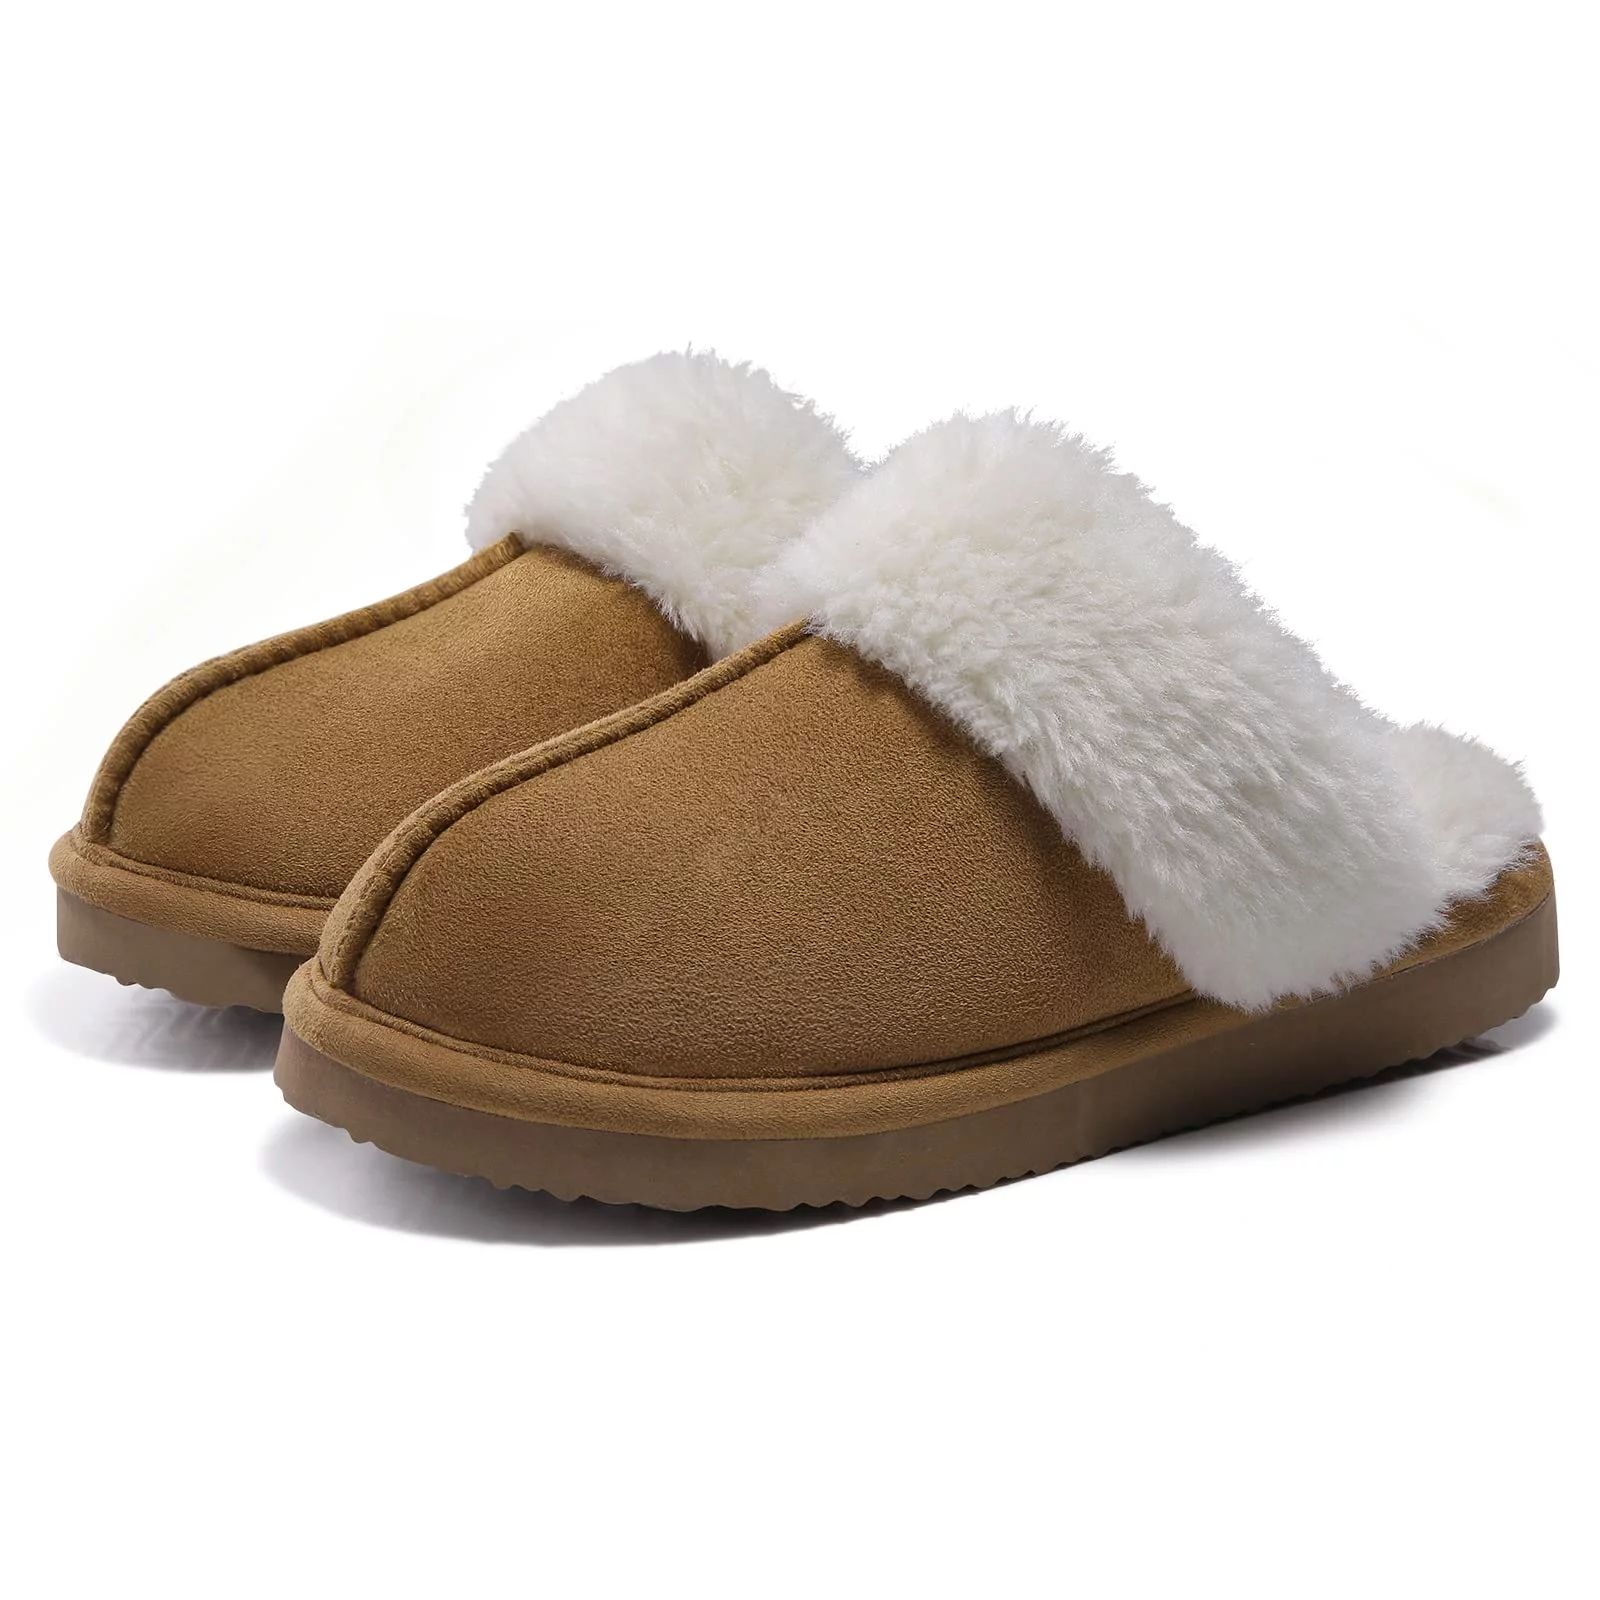 Litfun Women's Fuzzy Memory Foam Slippers Warm Comfy Winter House Shoes, Brown, Size 6-6.5 | Walmart (US)